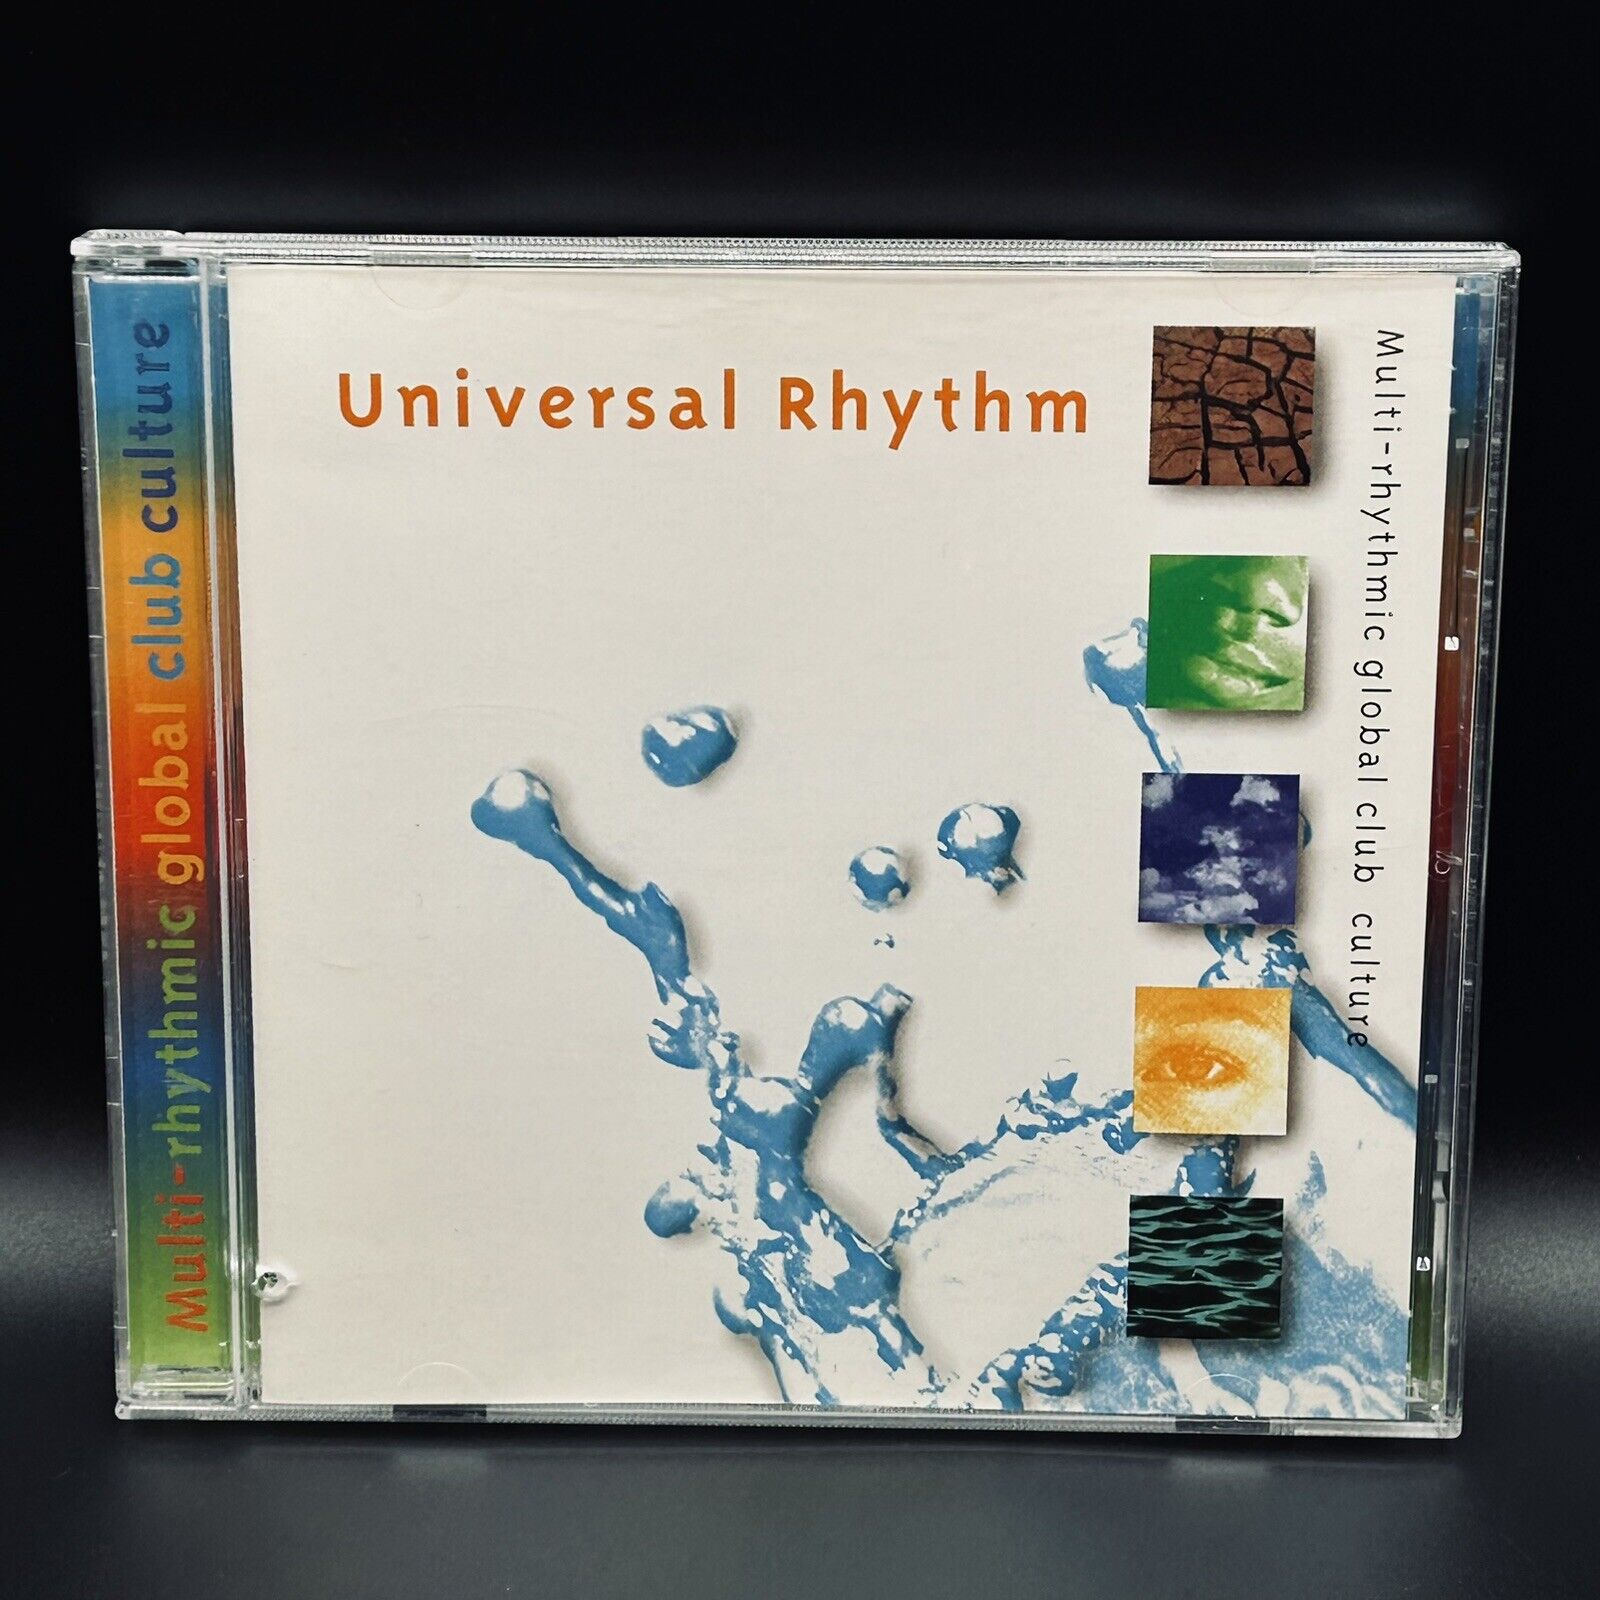 Universal Rhythm (CD 1996, Freeze Records) Electronic, Jazz, Funk, Instrumental